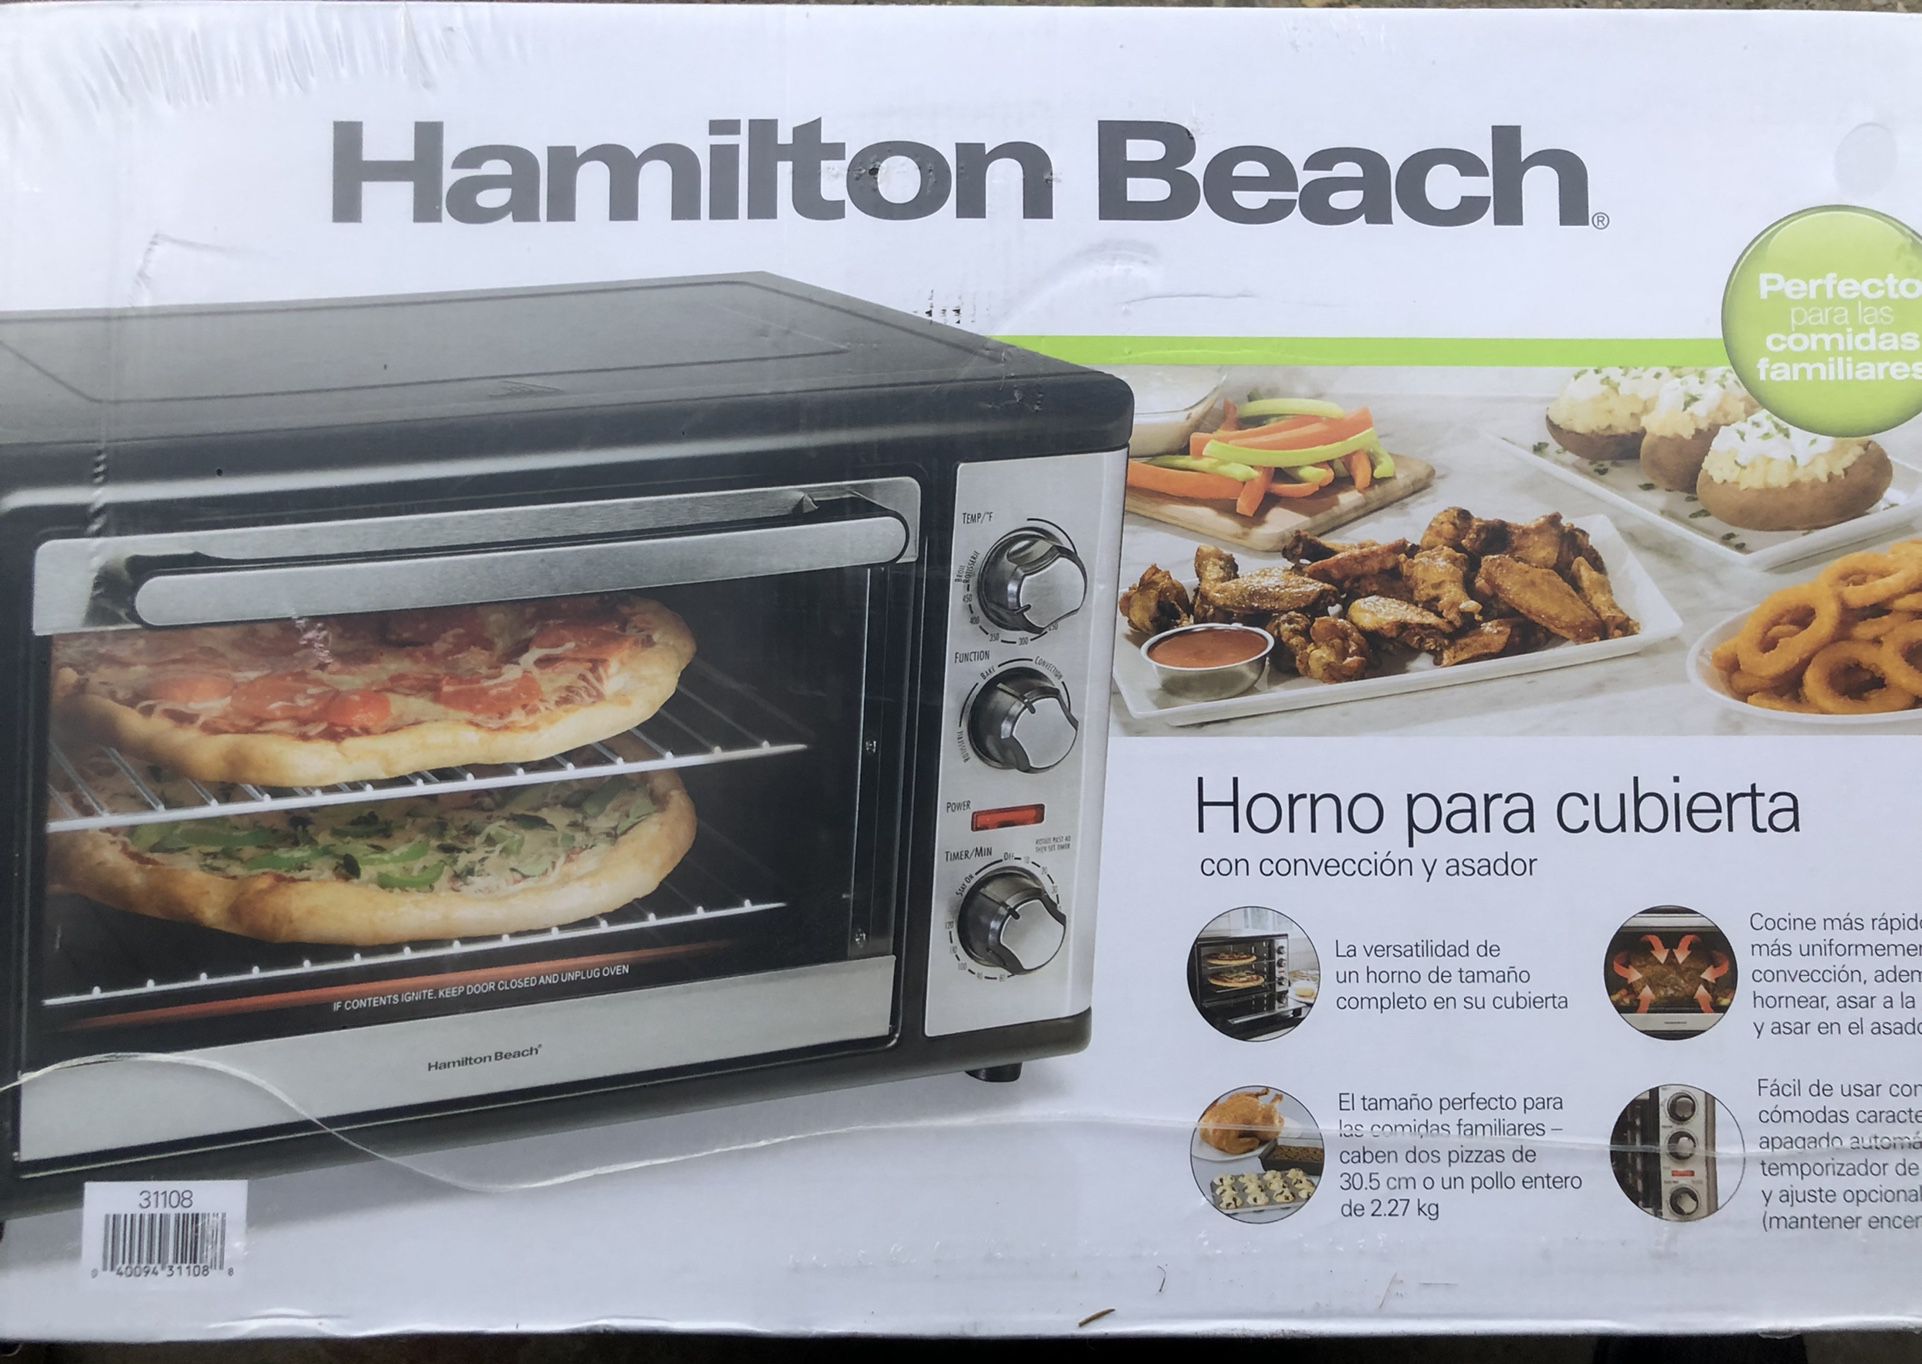 Hamilton Beach Revolving Rotisserie Countertop Oven with Convection - 31108